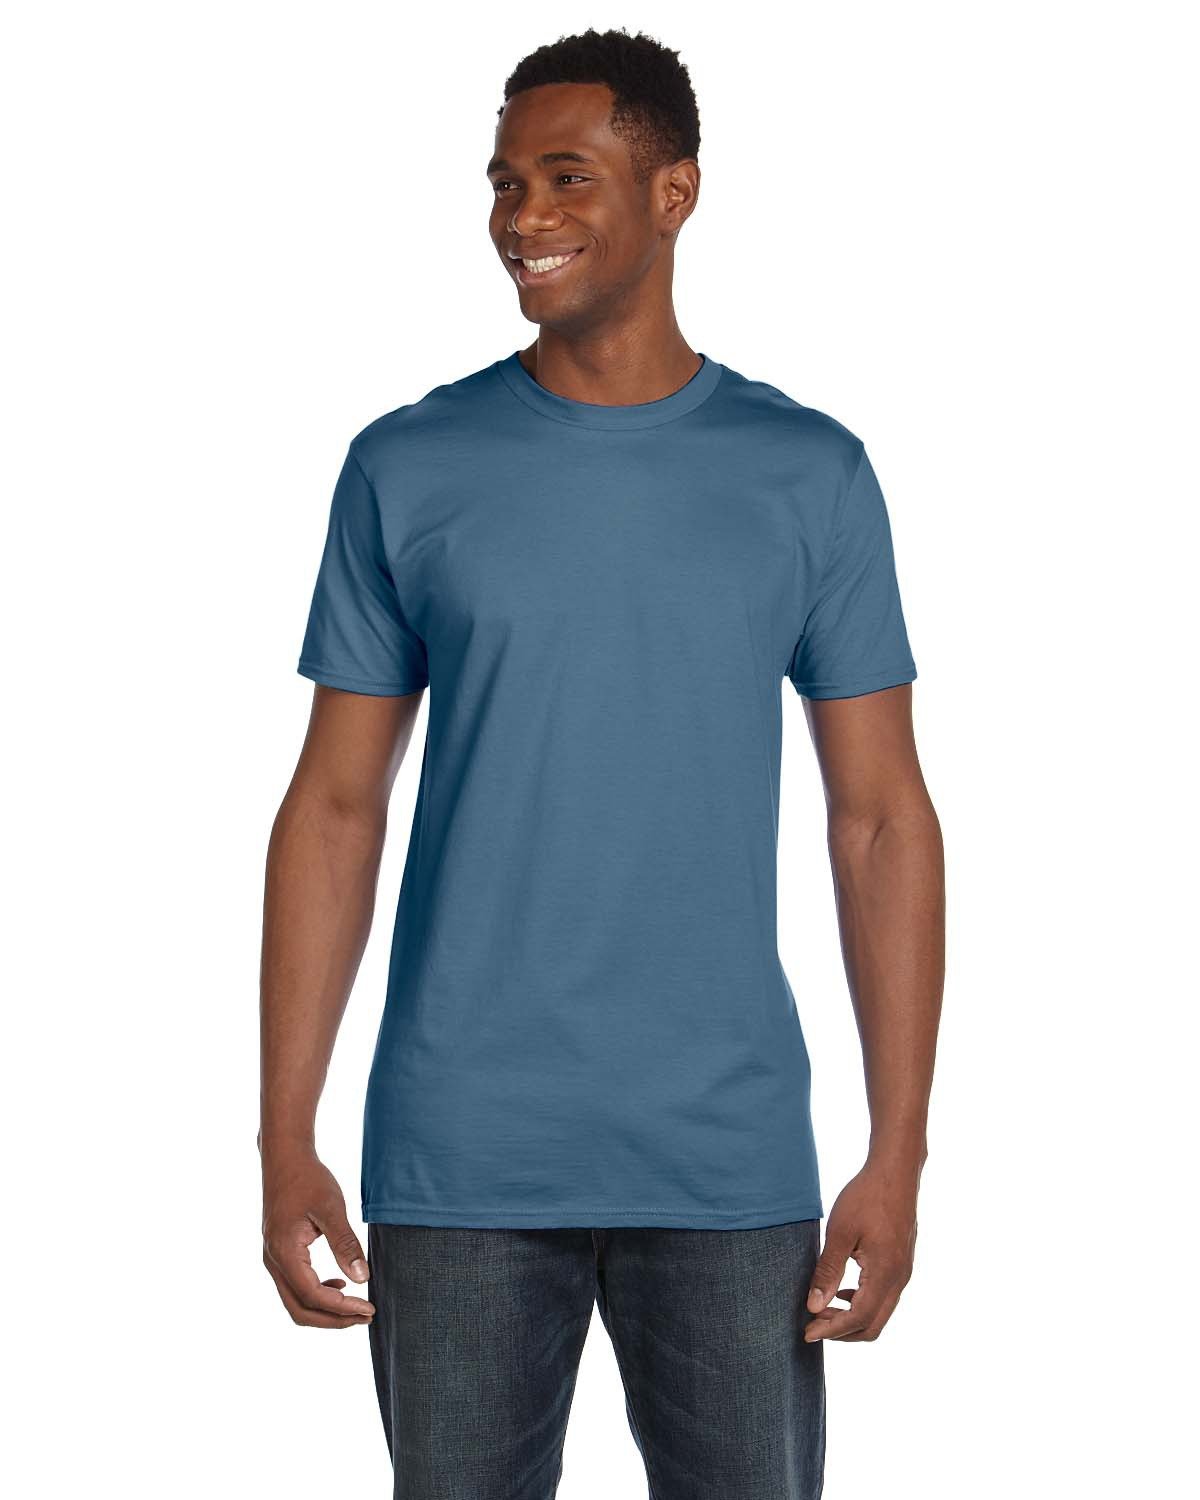 Hanes 4980: Nano-T Cotton T-Shirt. 